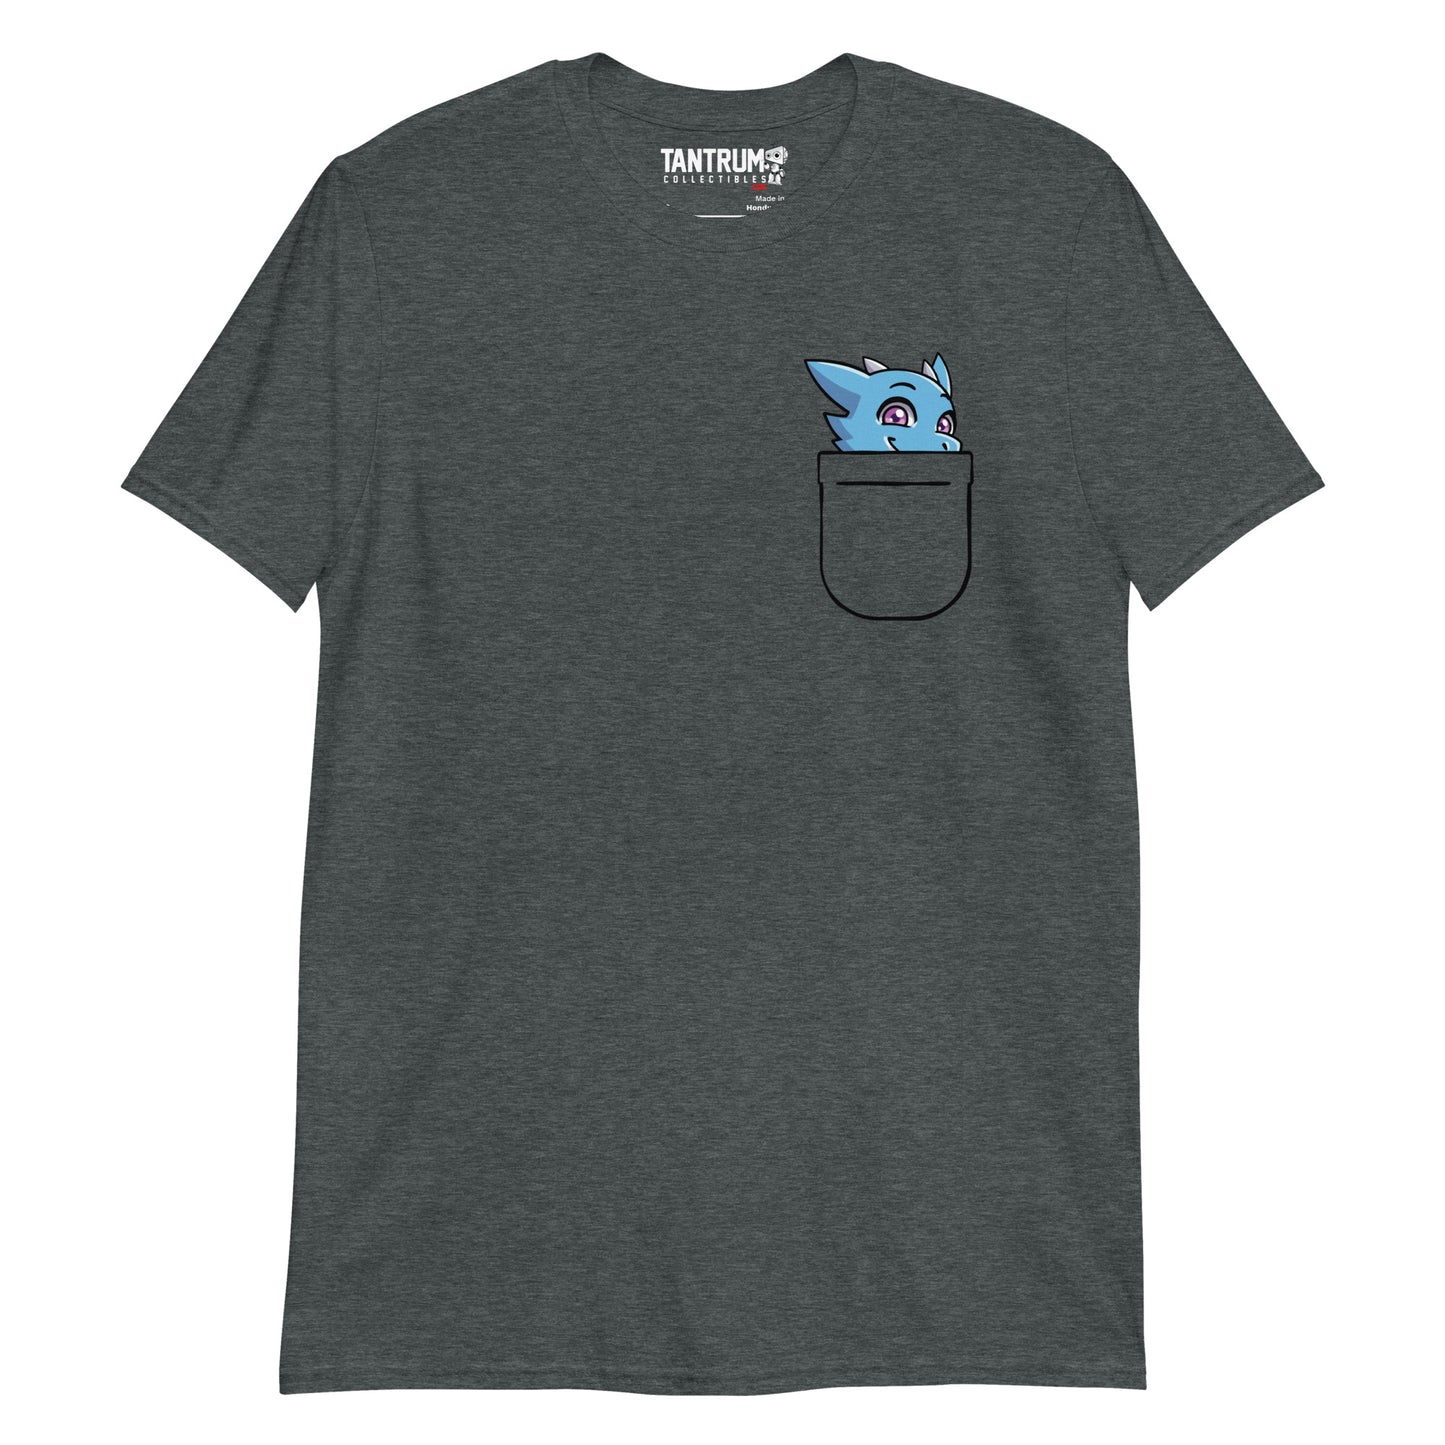 The Dragon Feeney - Unisex T-Shirt - Printed Pocket (Series 1) feenLurk